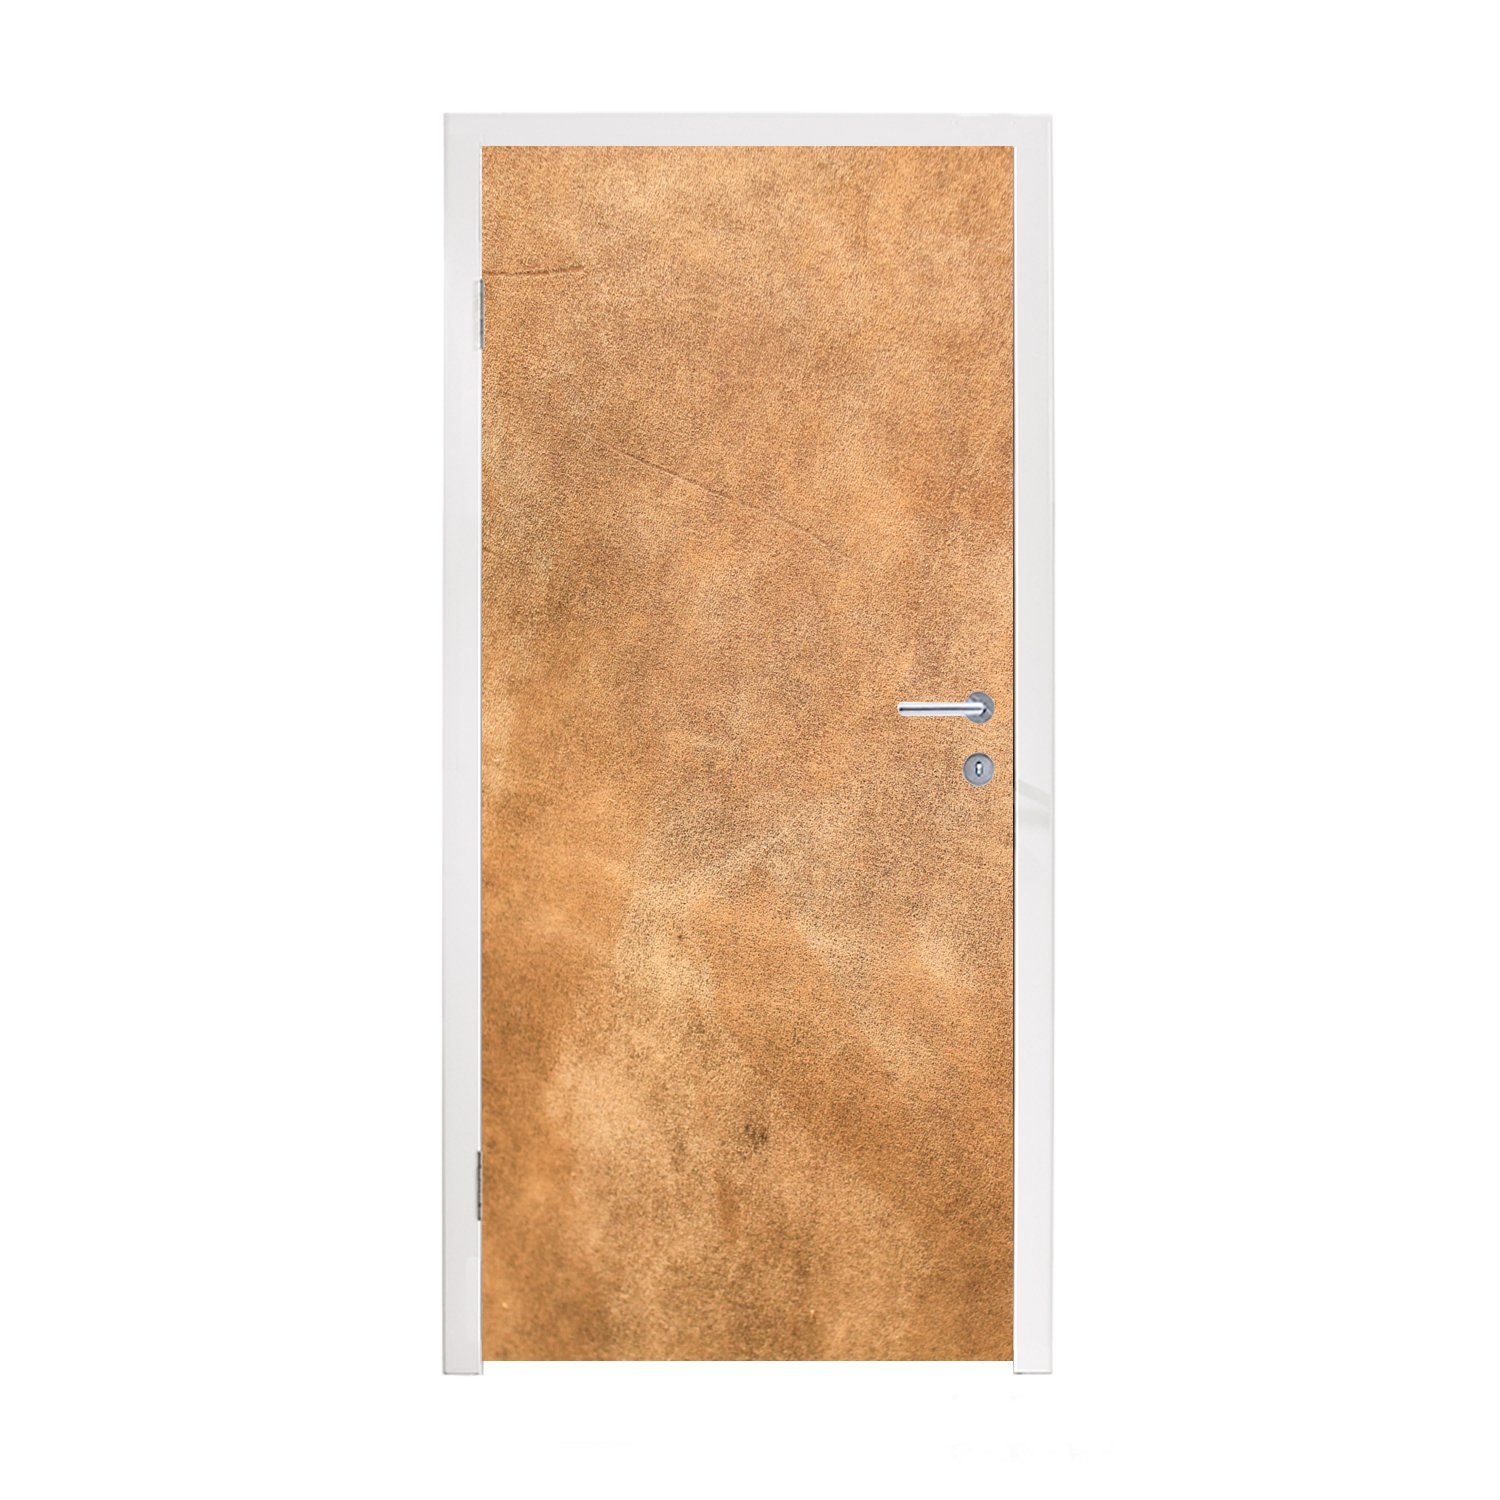 MuchoWow Türtapete Leder - Strukturiert - Lederoptik - Braun, Matt, bedruckt, (1 St), Fototapete für Tür, Türaufkleber, 75x205 cm